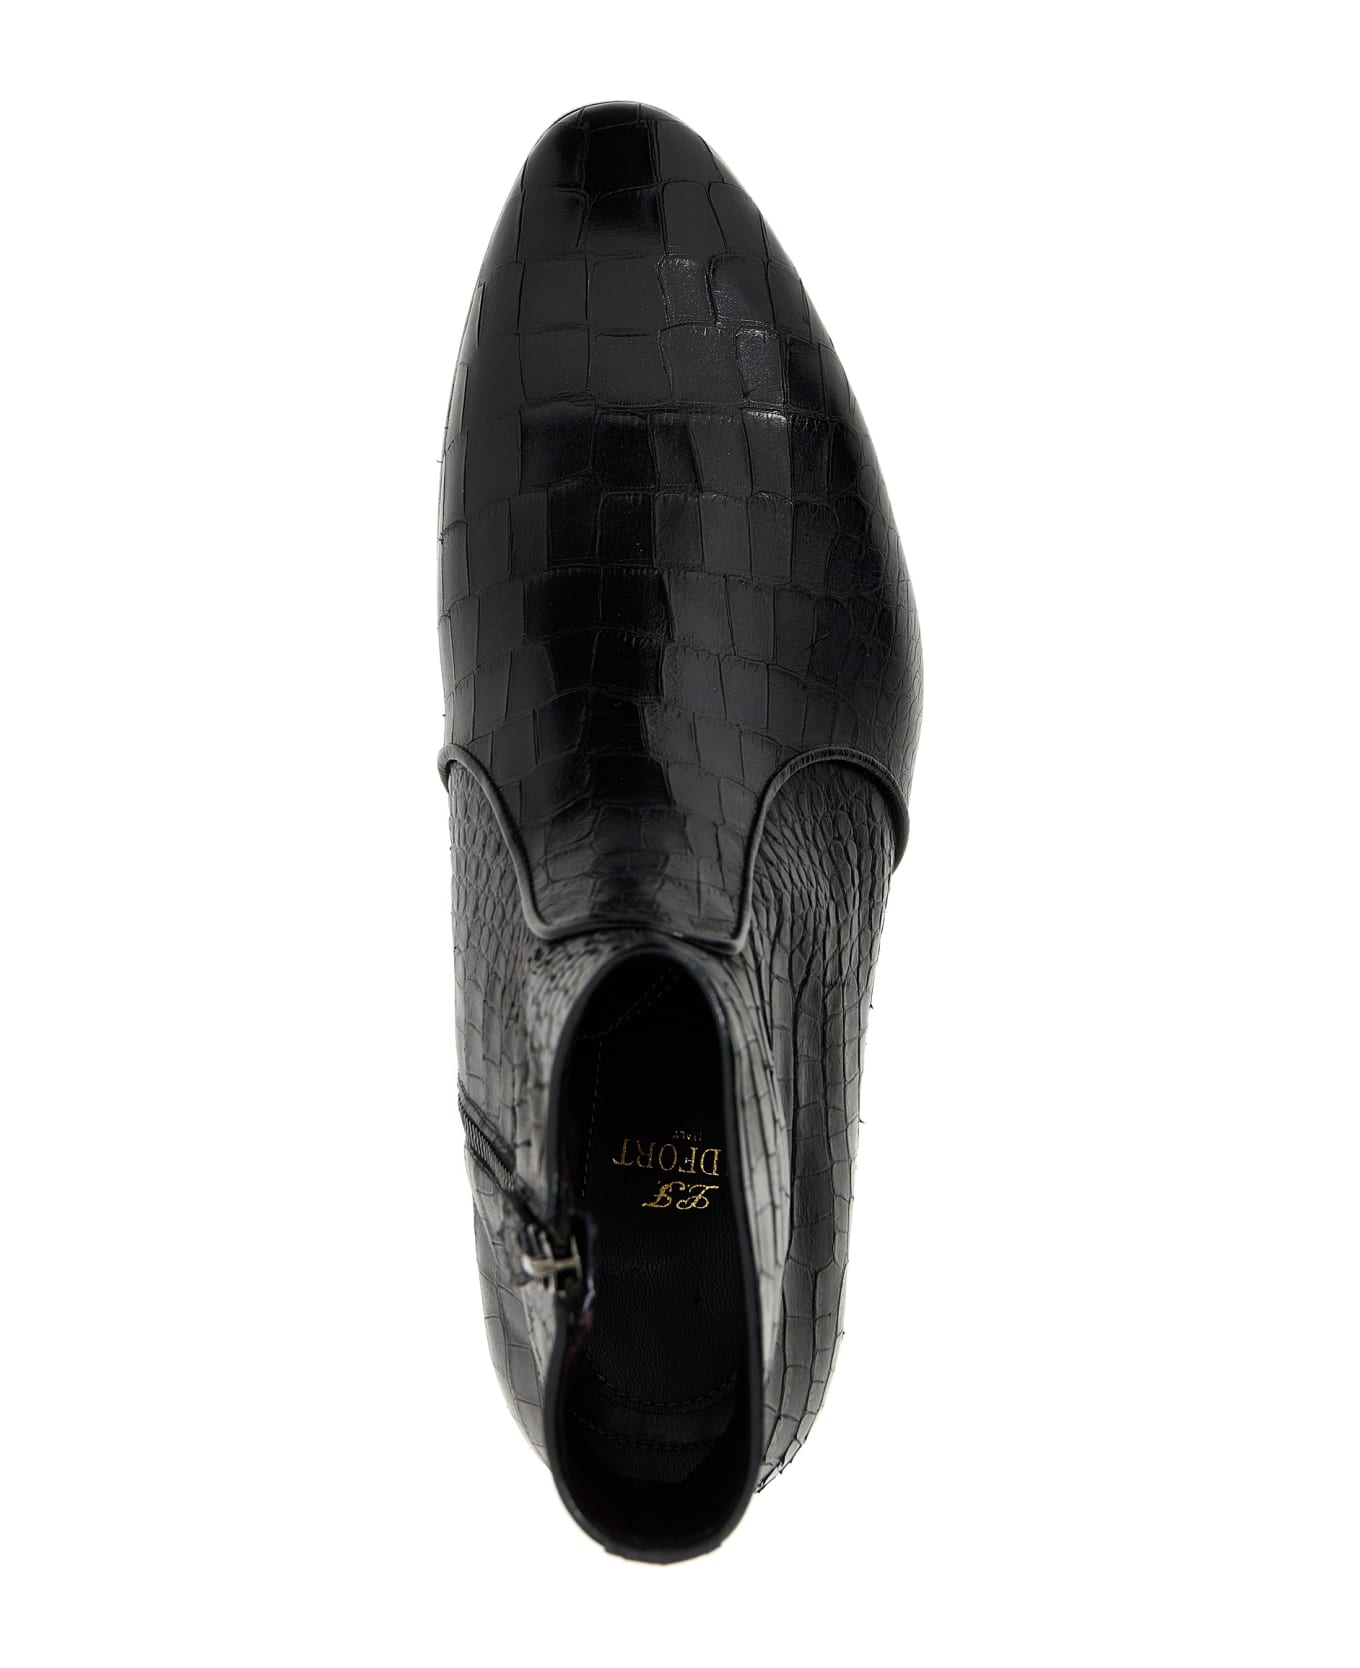 Lidfort 'louisiana' Ankle Boots - Black  